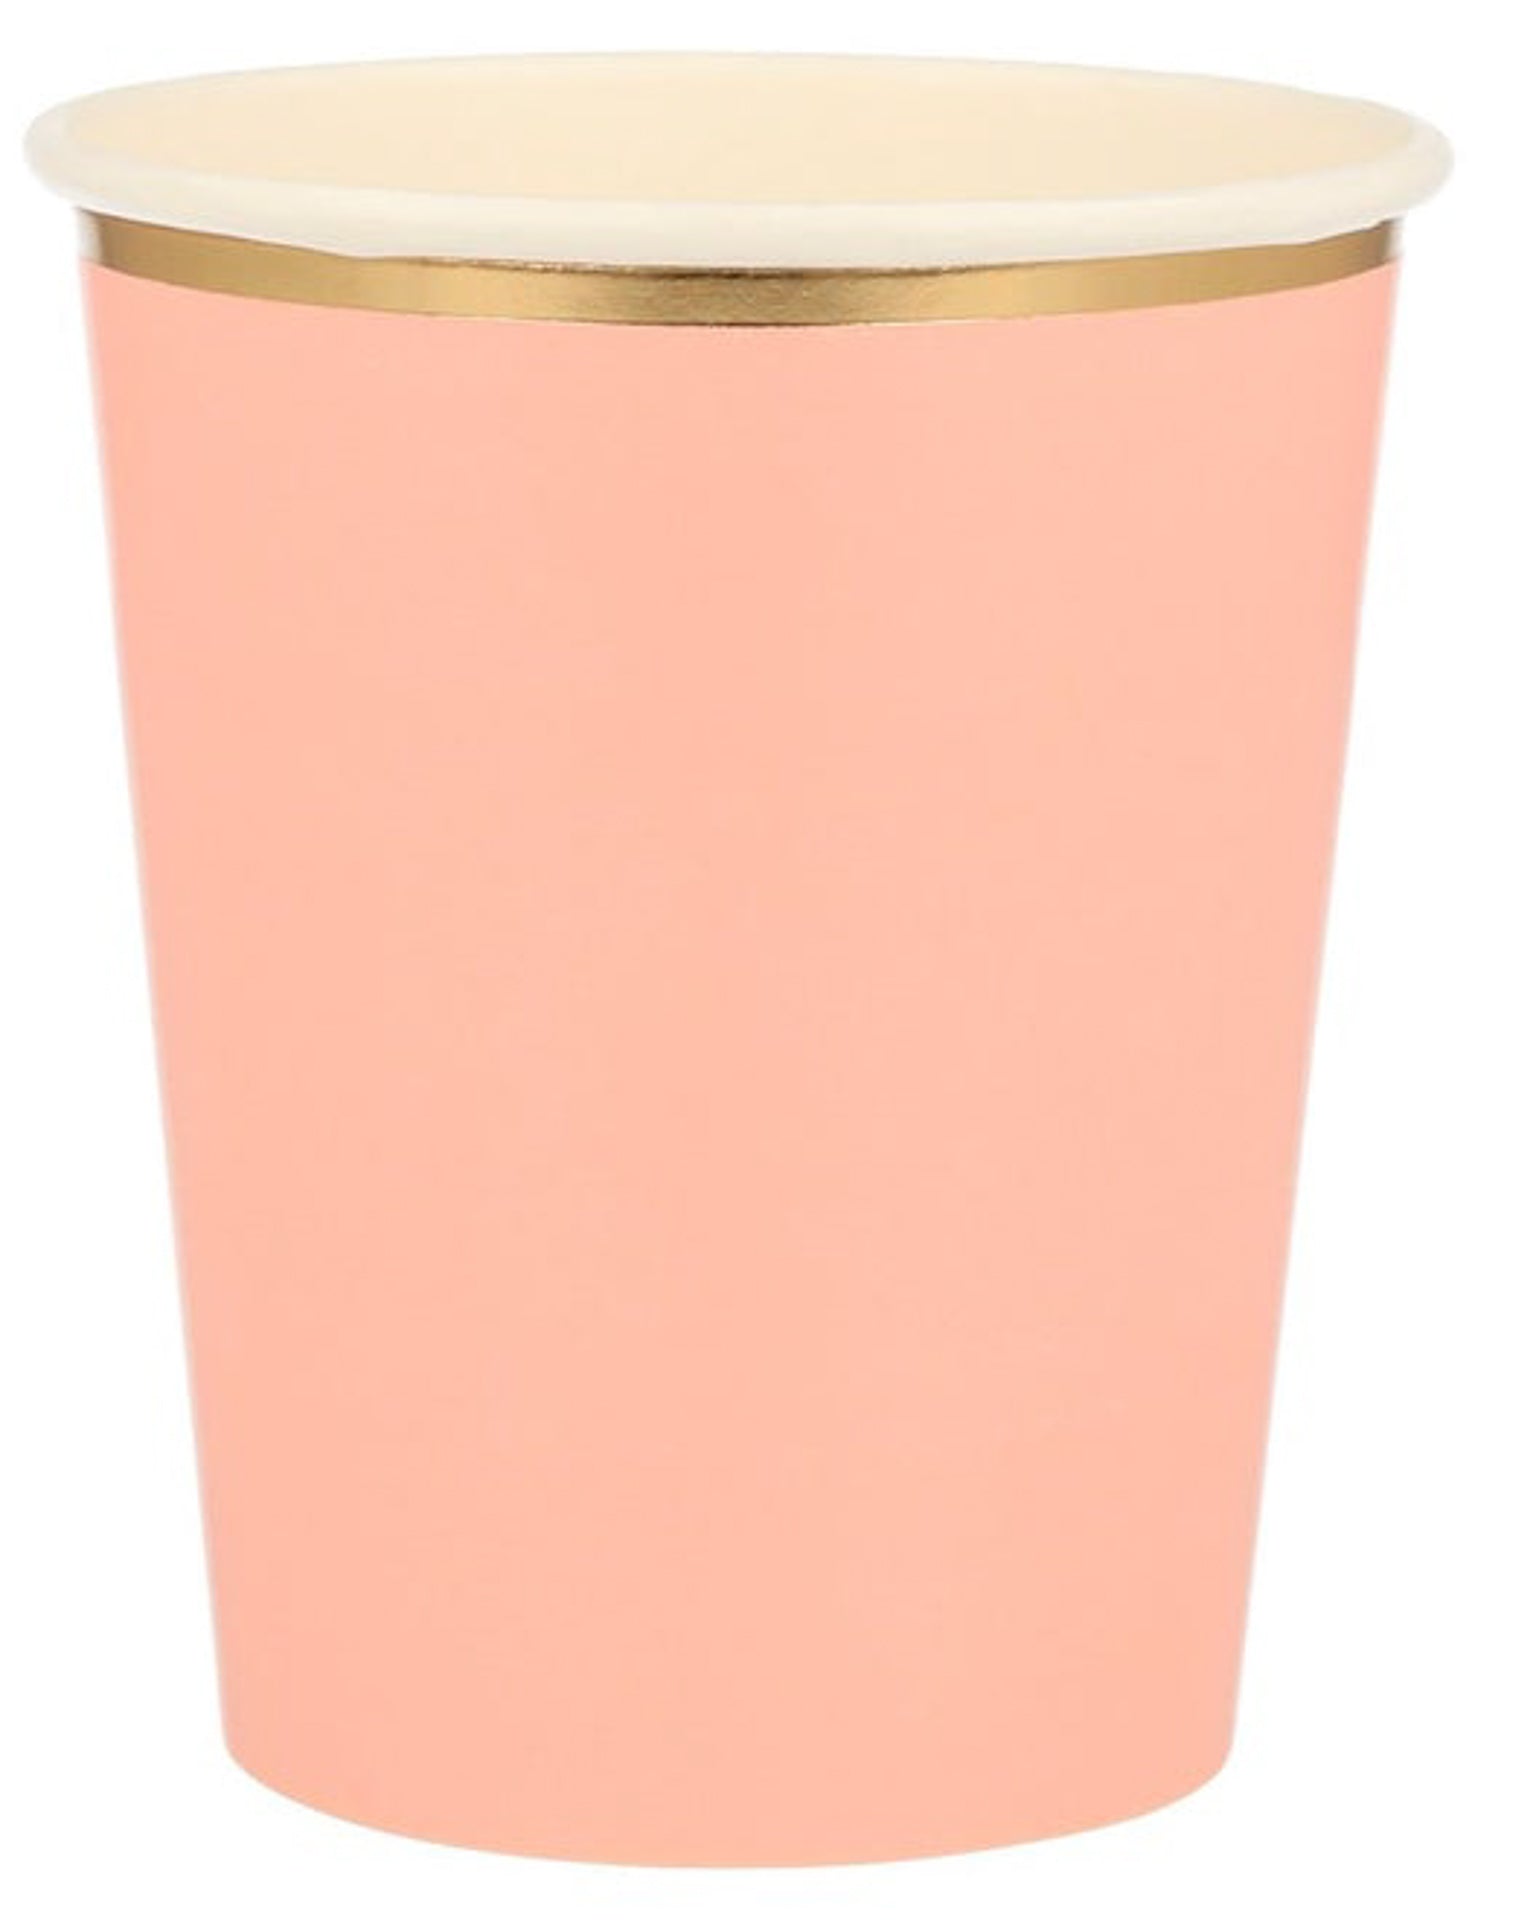 Little meri meri paper + party pink tone cups